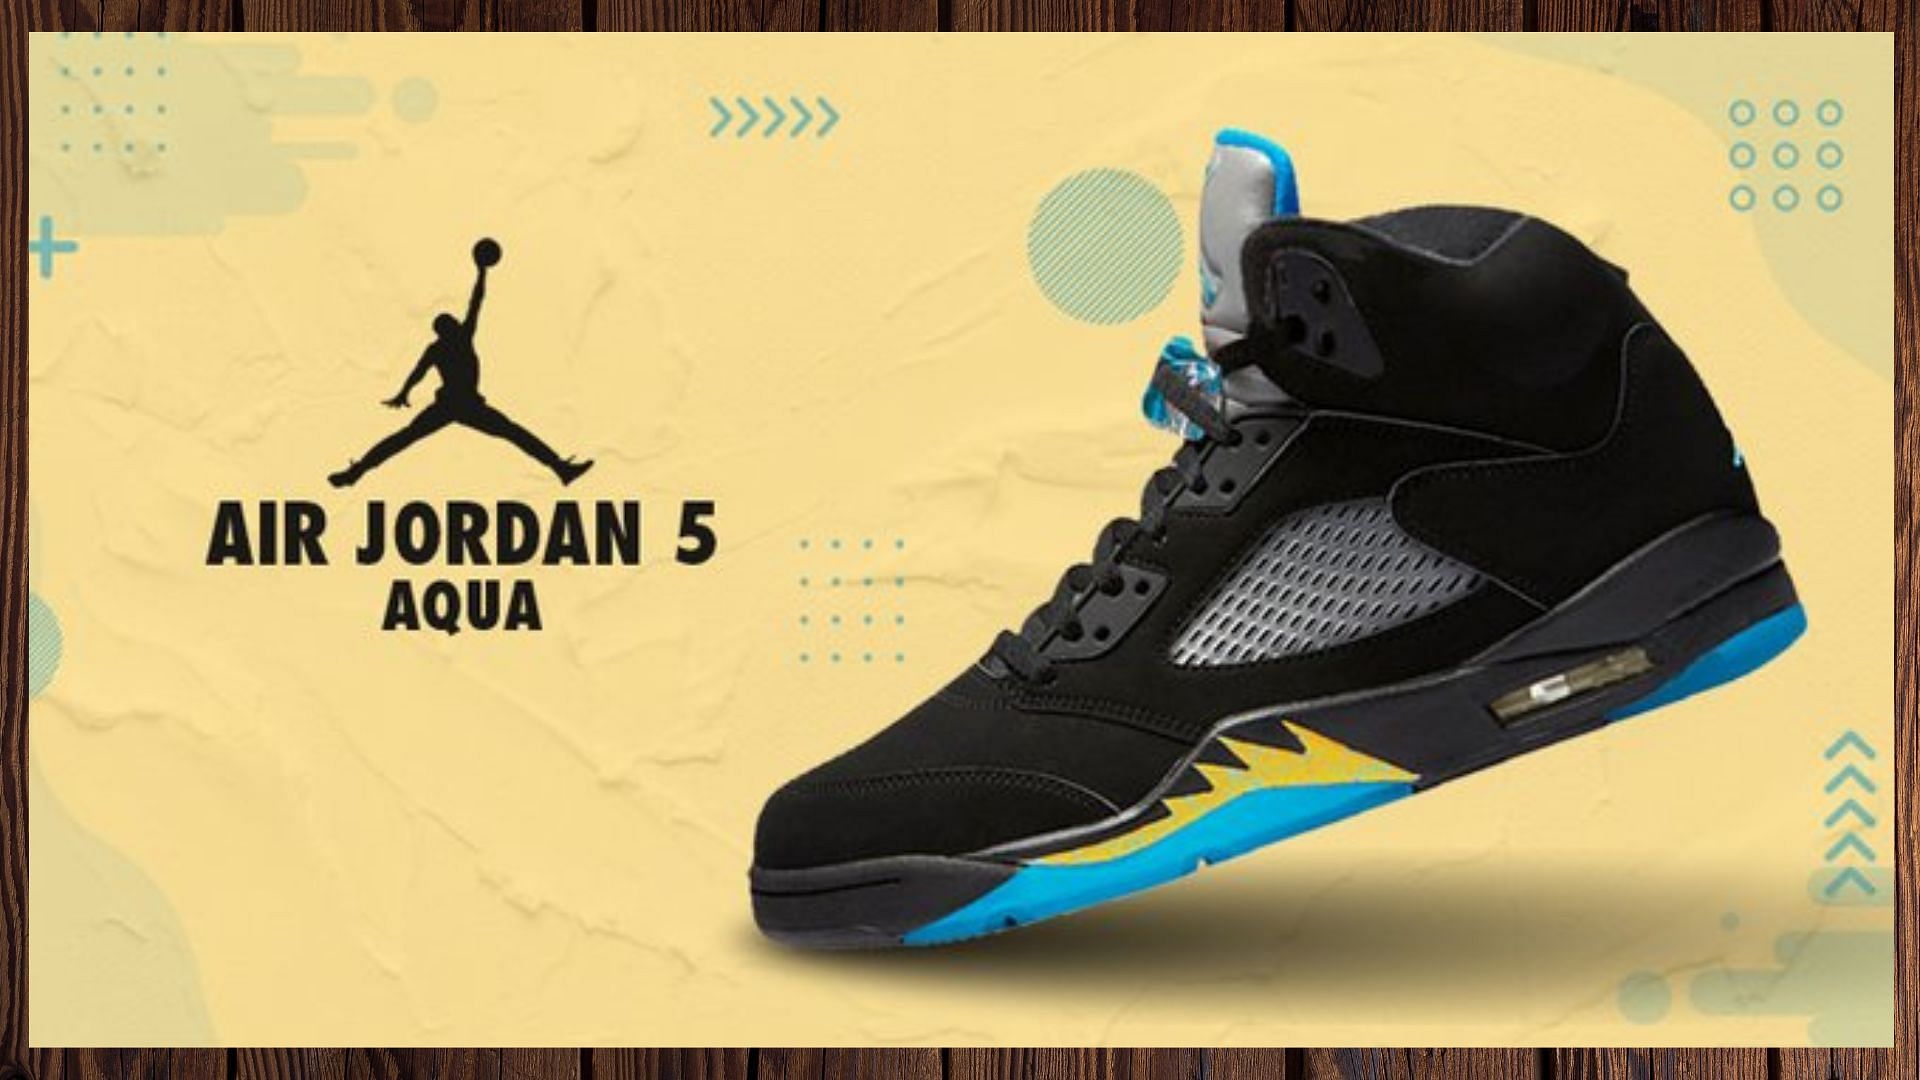 Descompostura Crueldad Un pan Where to buy Air Jordan 5 Aqua shoes? Price, release date and more details  explored